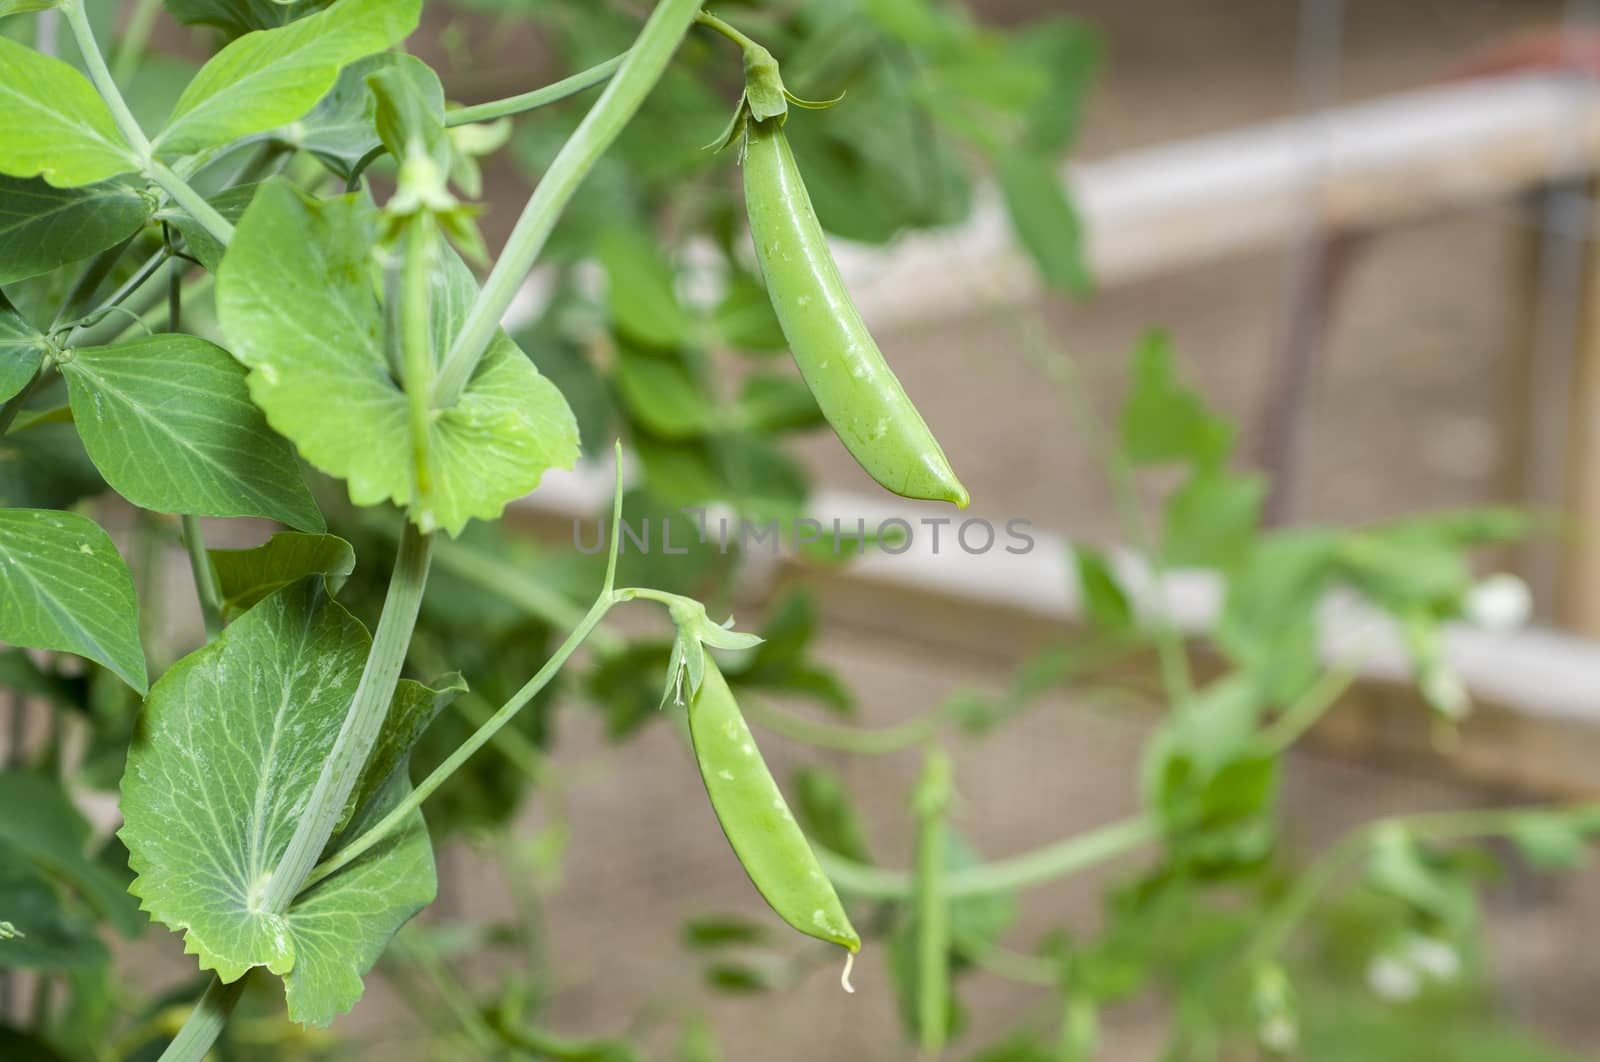 Sugar snap peas (Pisum sativum var. macrocarpon) in the garden by Njean